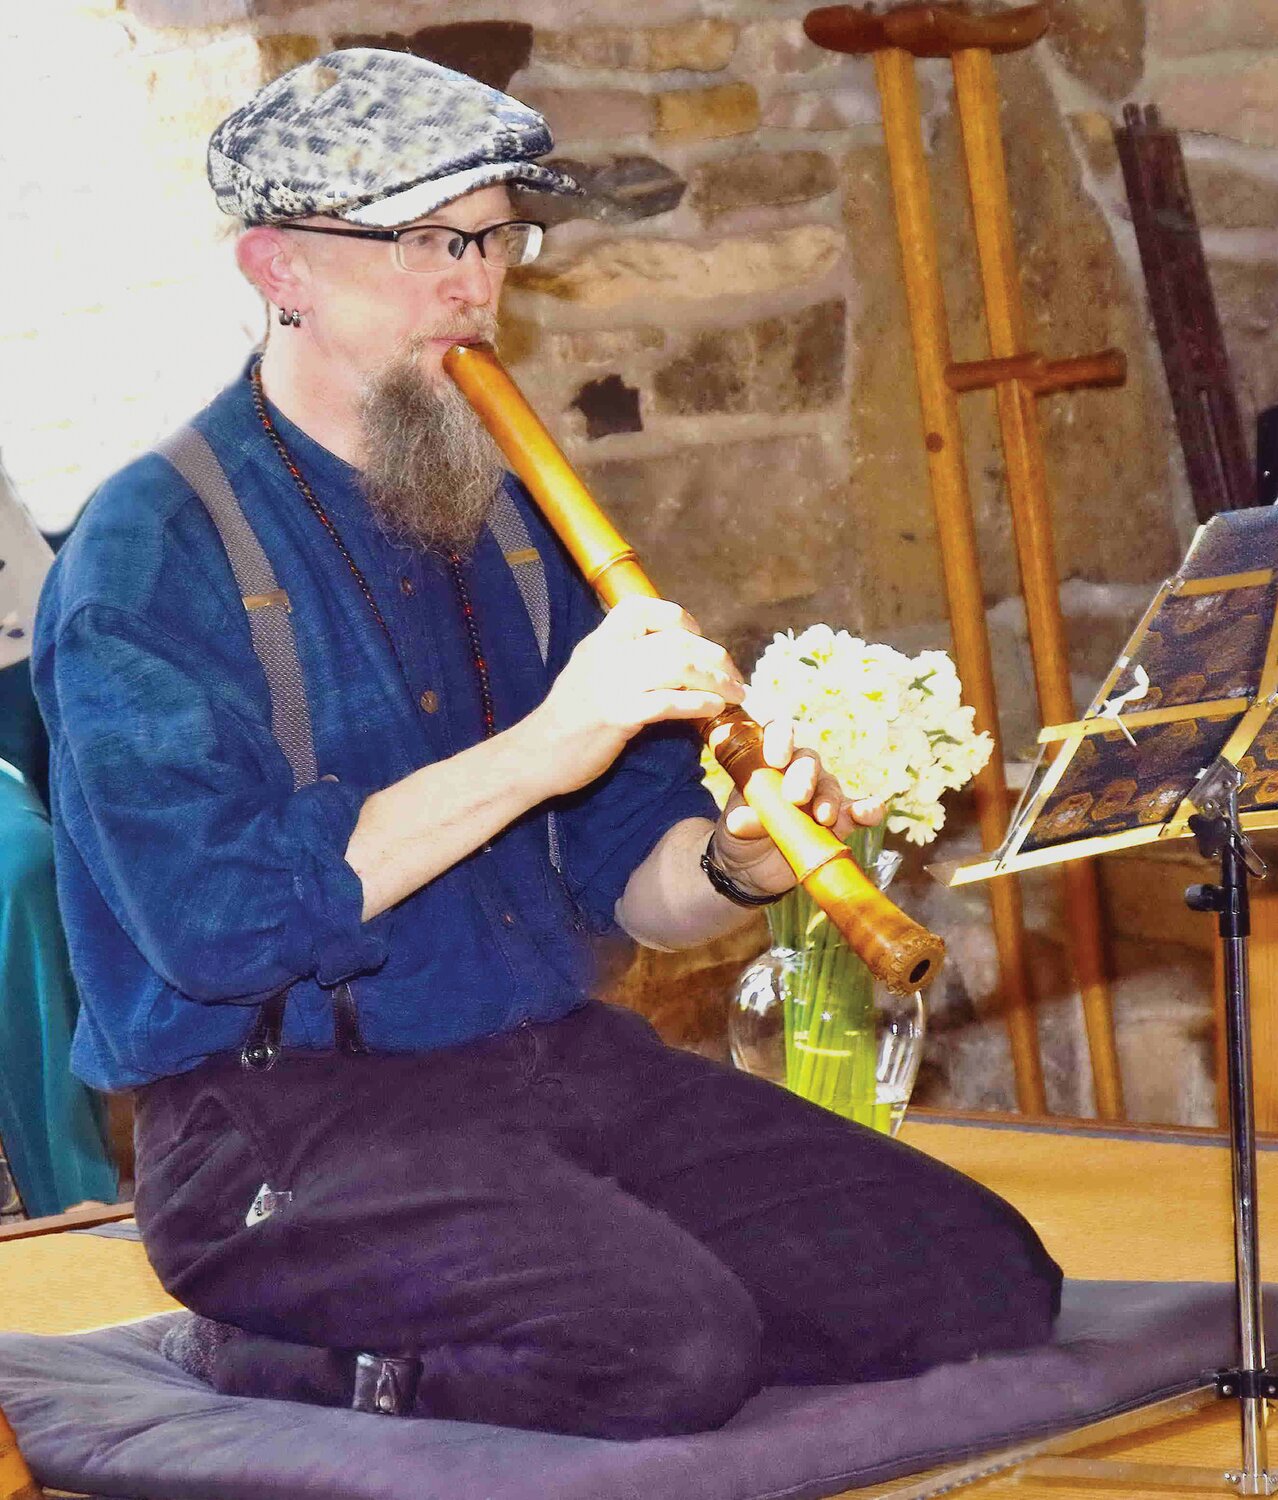 Glenn Swann provides traditional Japanese music on a vintage bamboo flute (shakuhachi).